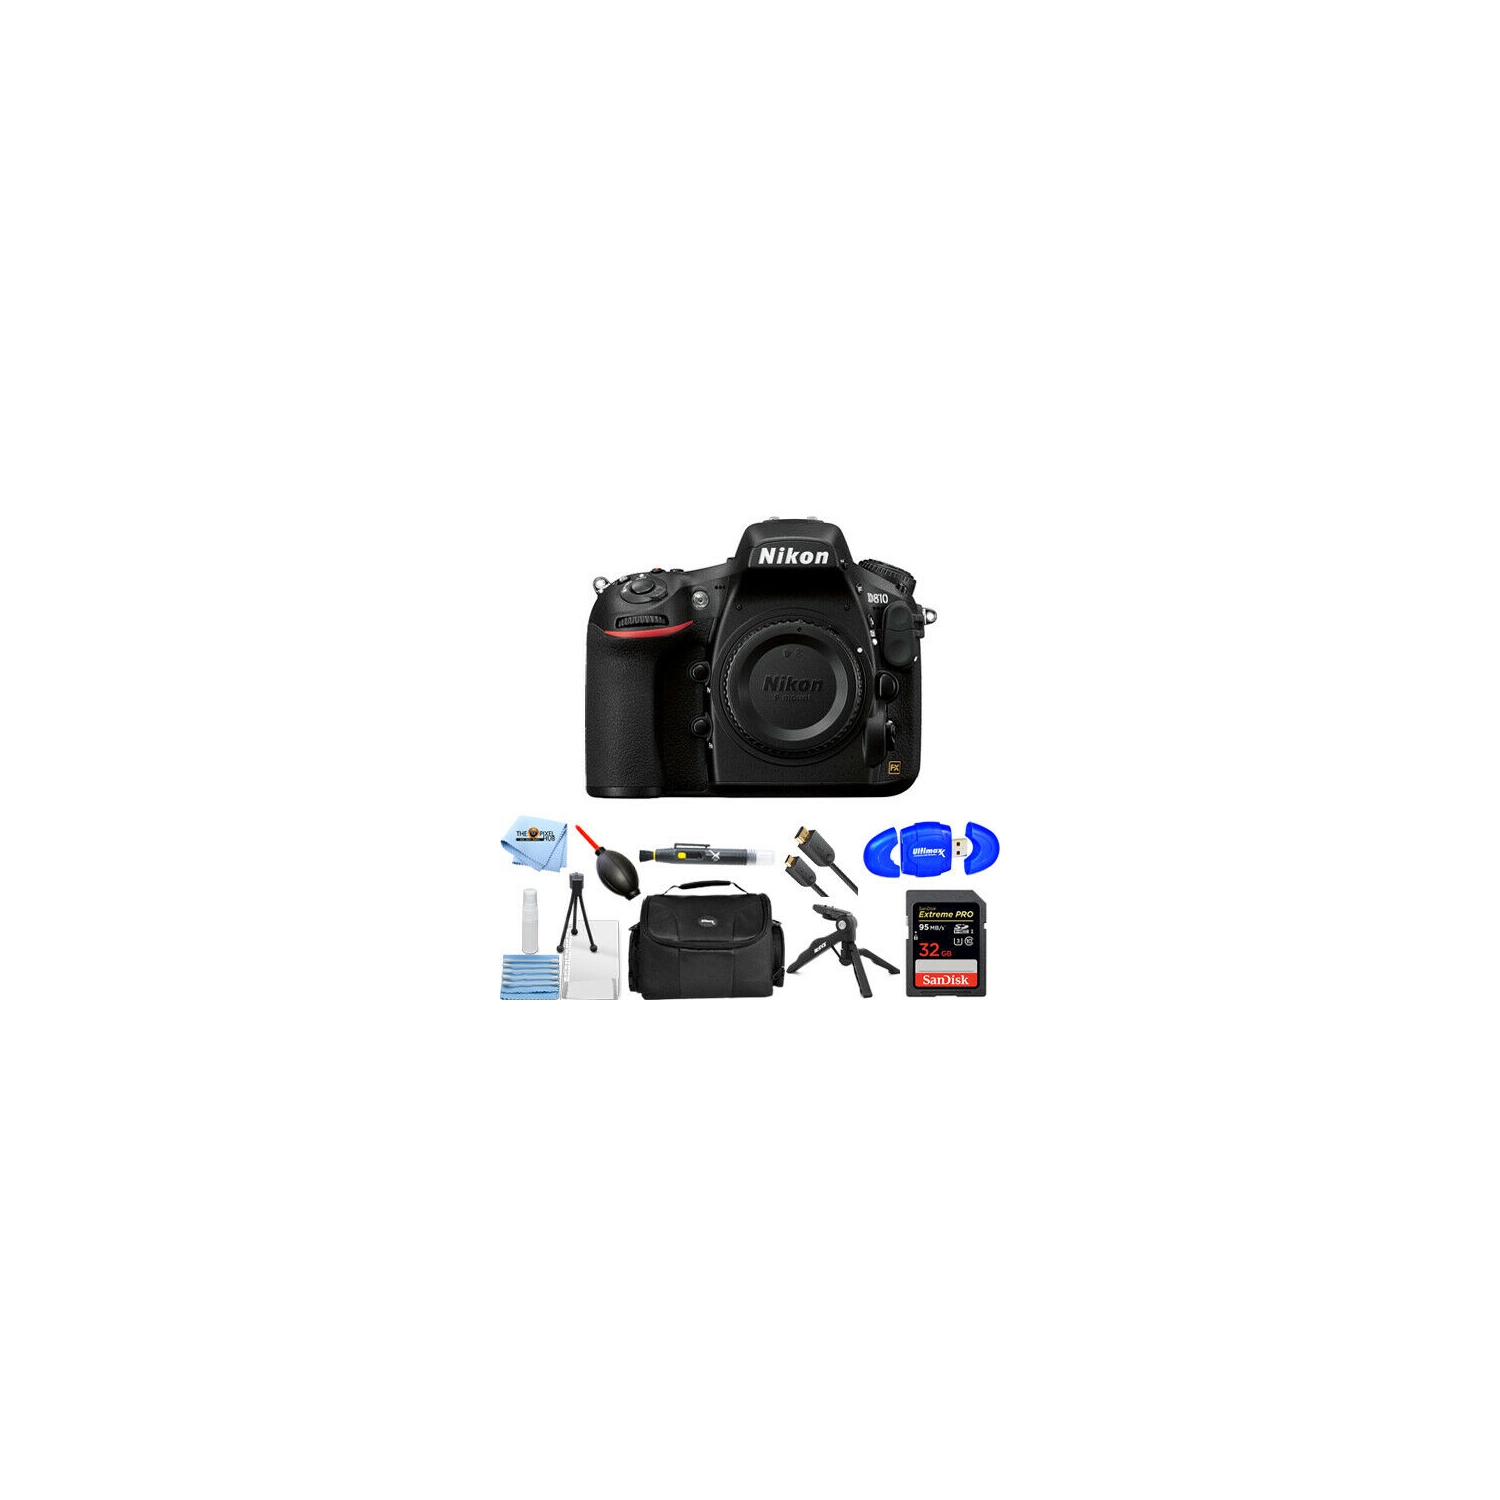 Nikon D810 45.7MP DSLR Camera (Body Only) 1542 - 10PC Accessory Bundle